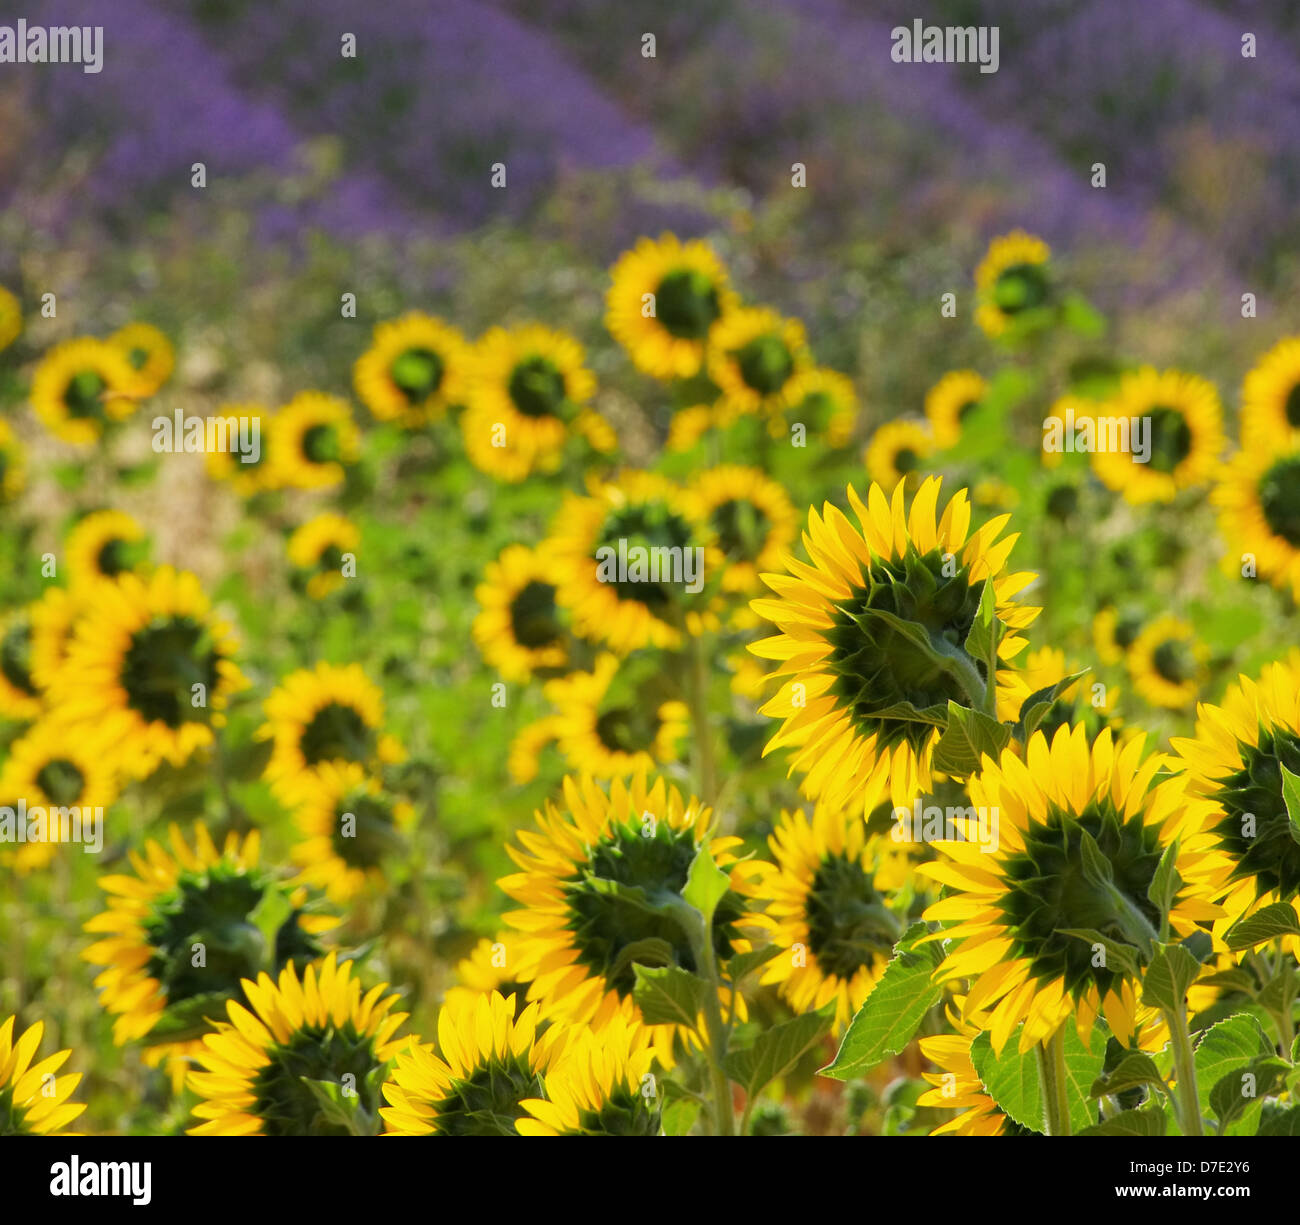 Lavendel und Sonnenblumen - lavender and sunflowers 02 Stock Photo